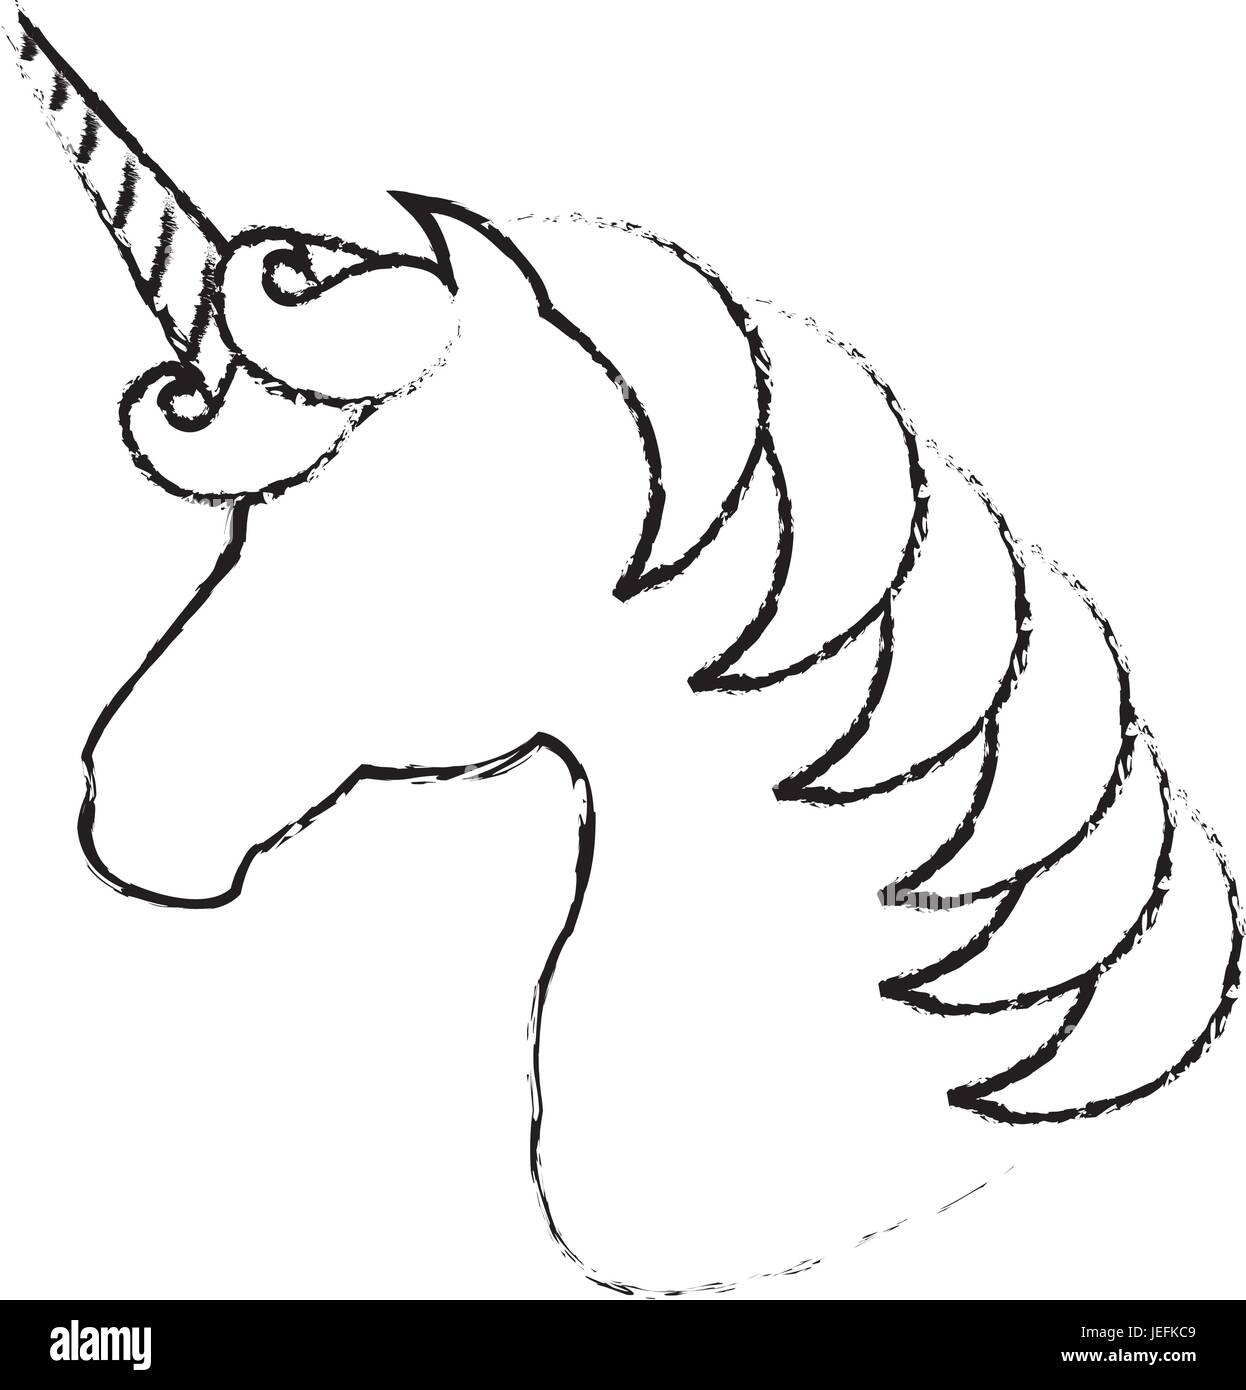 Unicorn animal horn icon vector illustration design draw Stock Vector